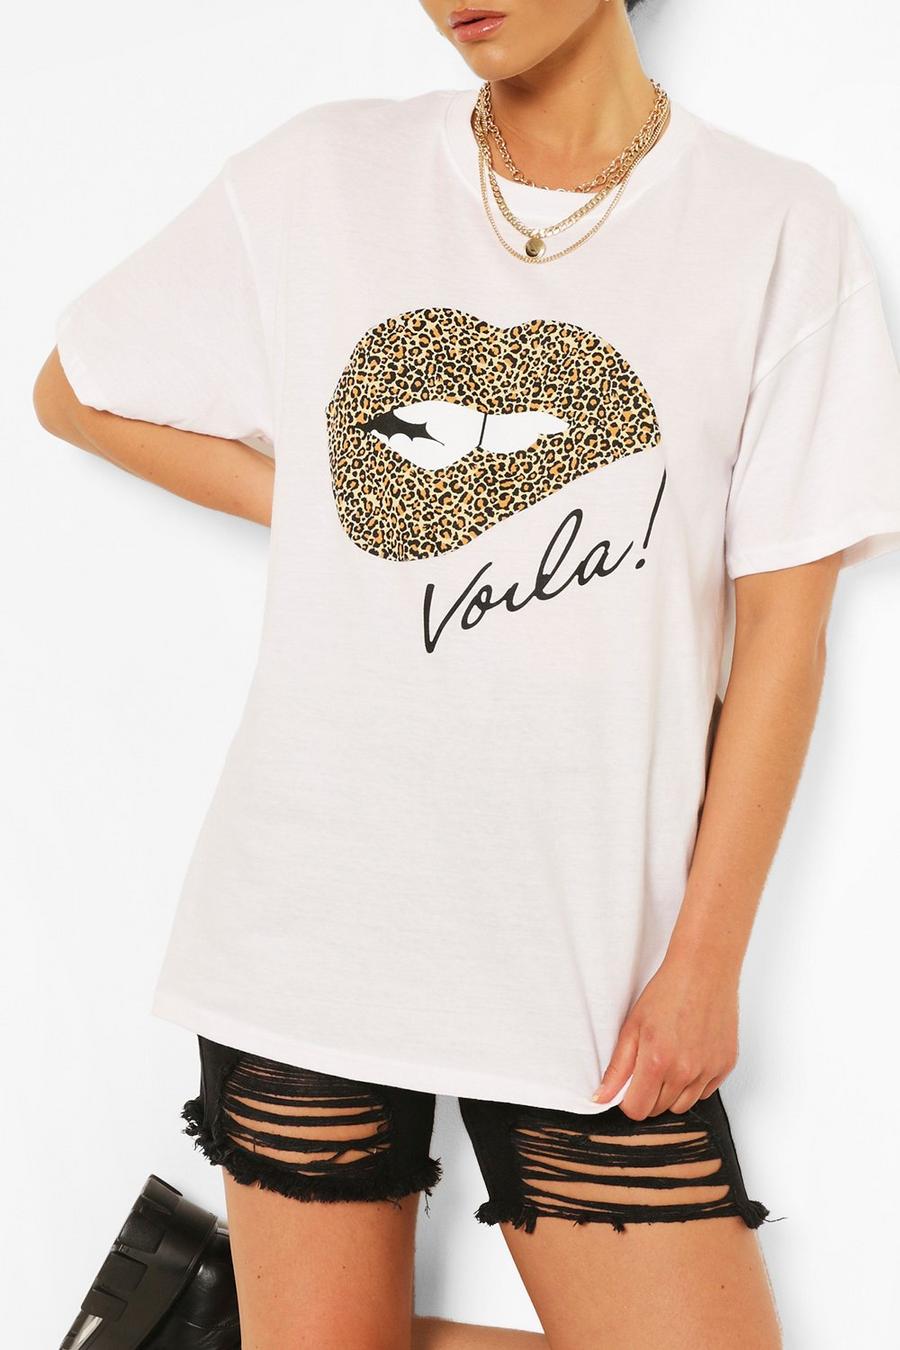 Voila Leopard Lips T- Shirt image number 1